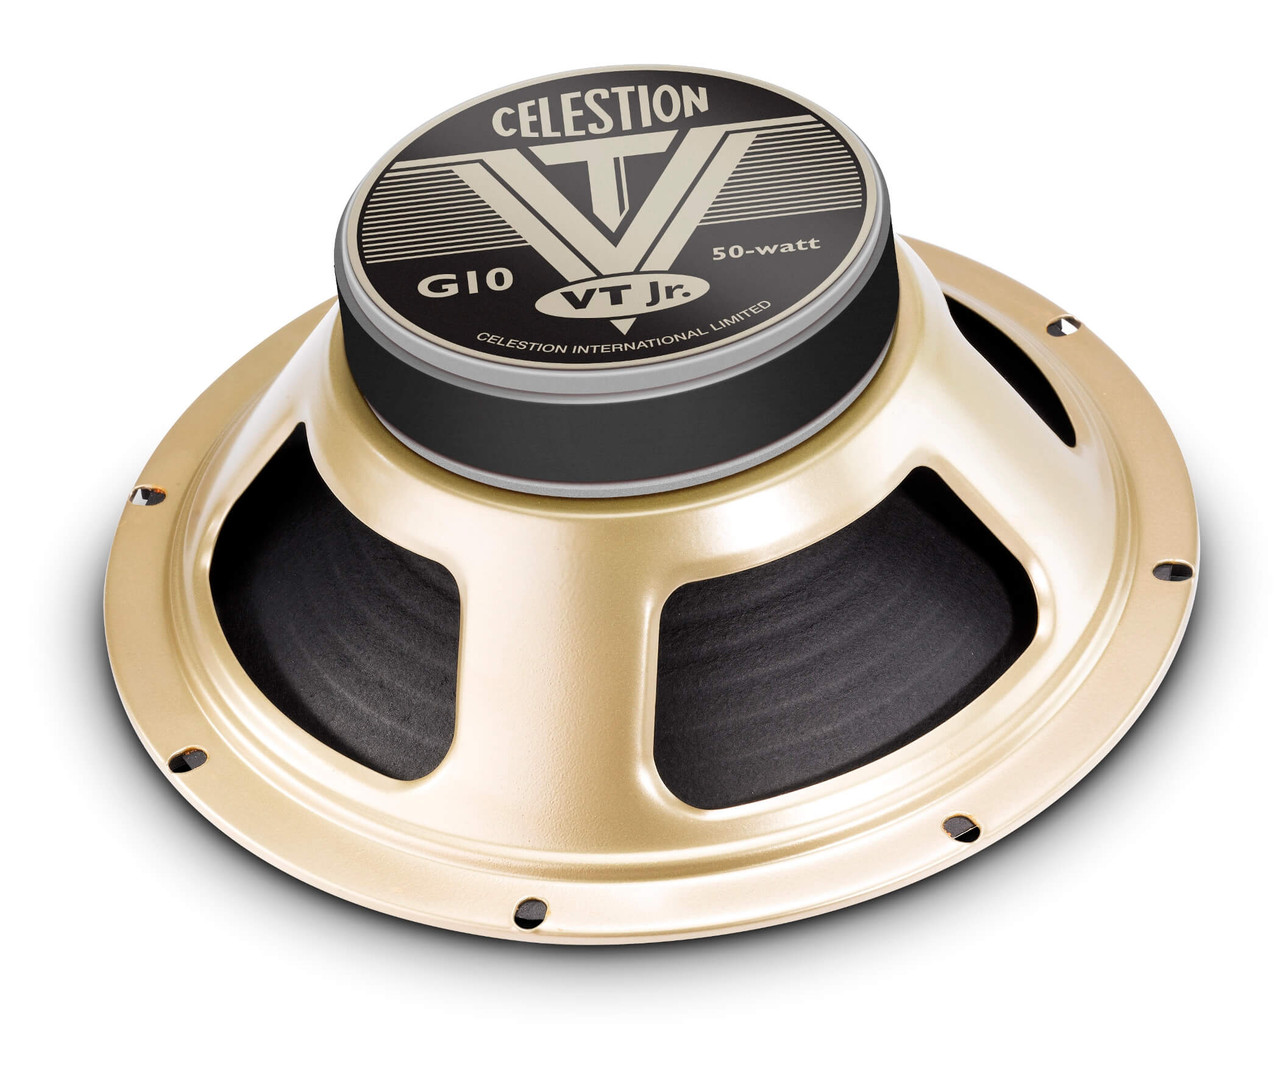 Celestion VT-Junior - 50W 16ohm